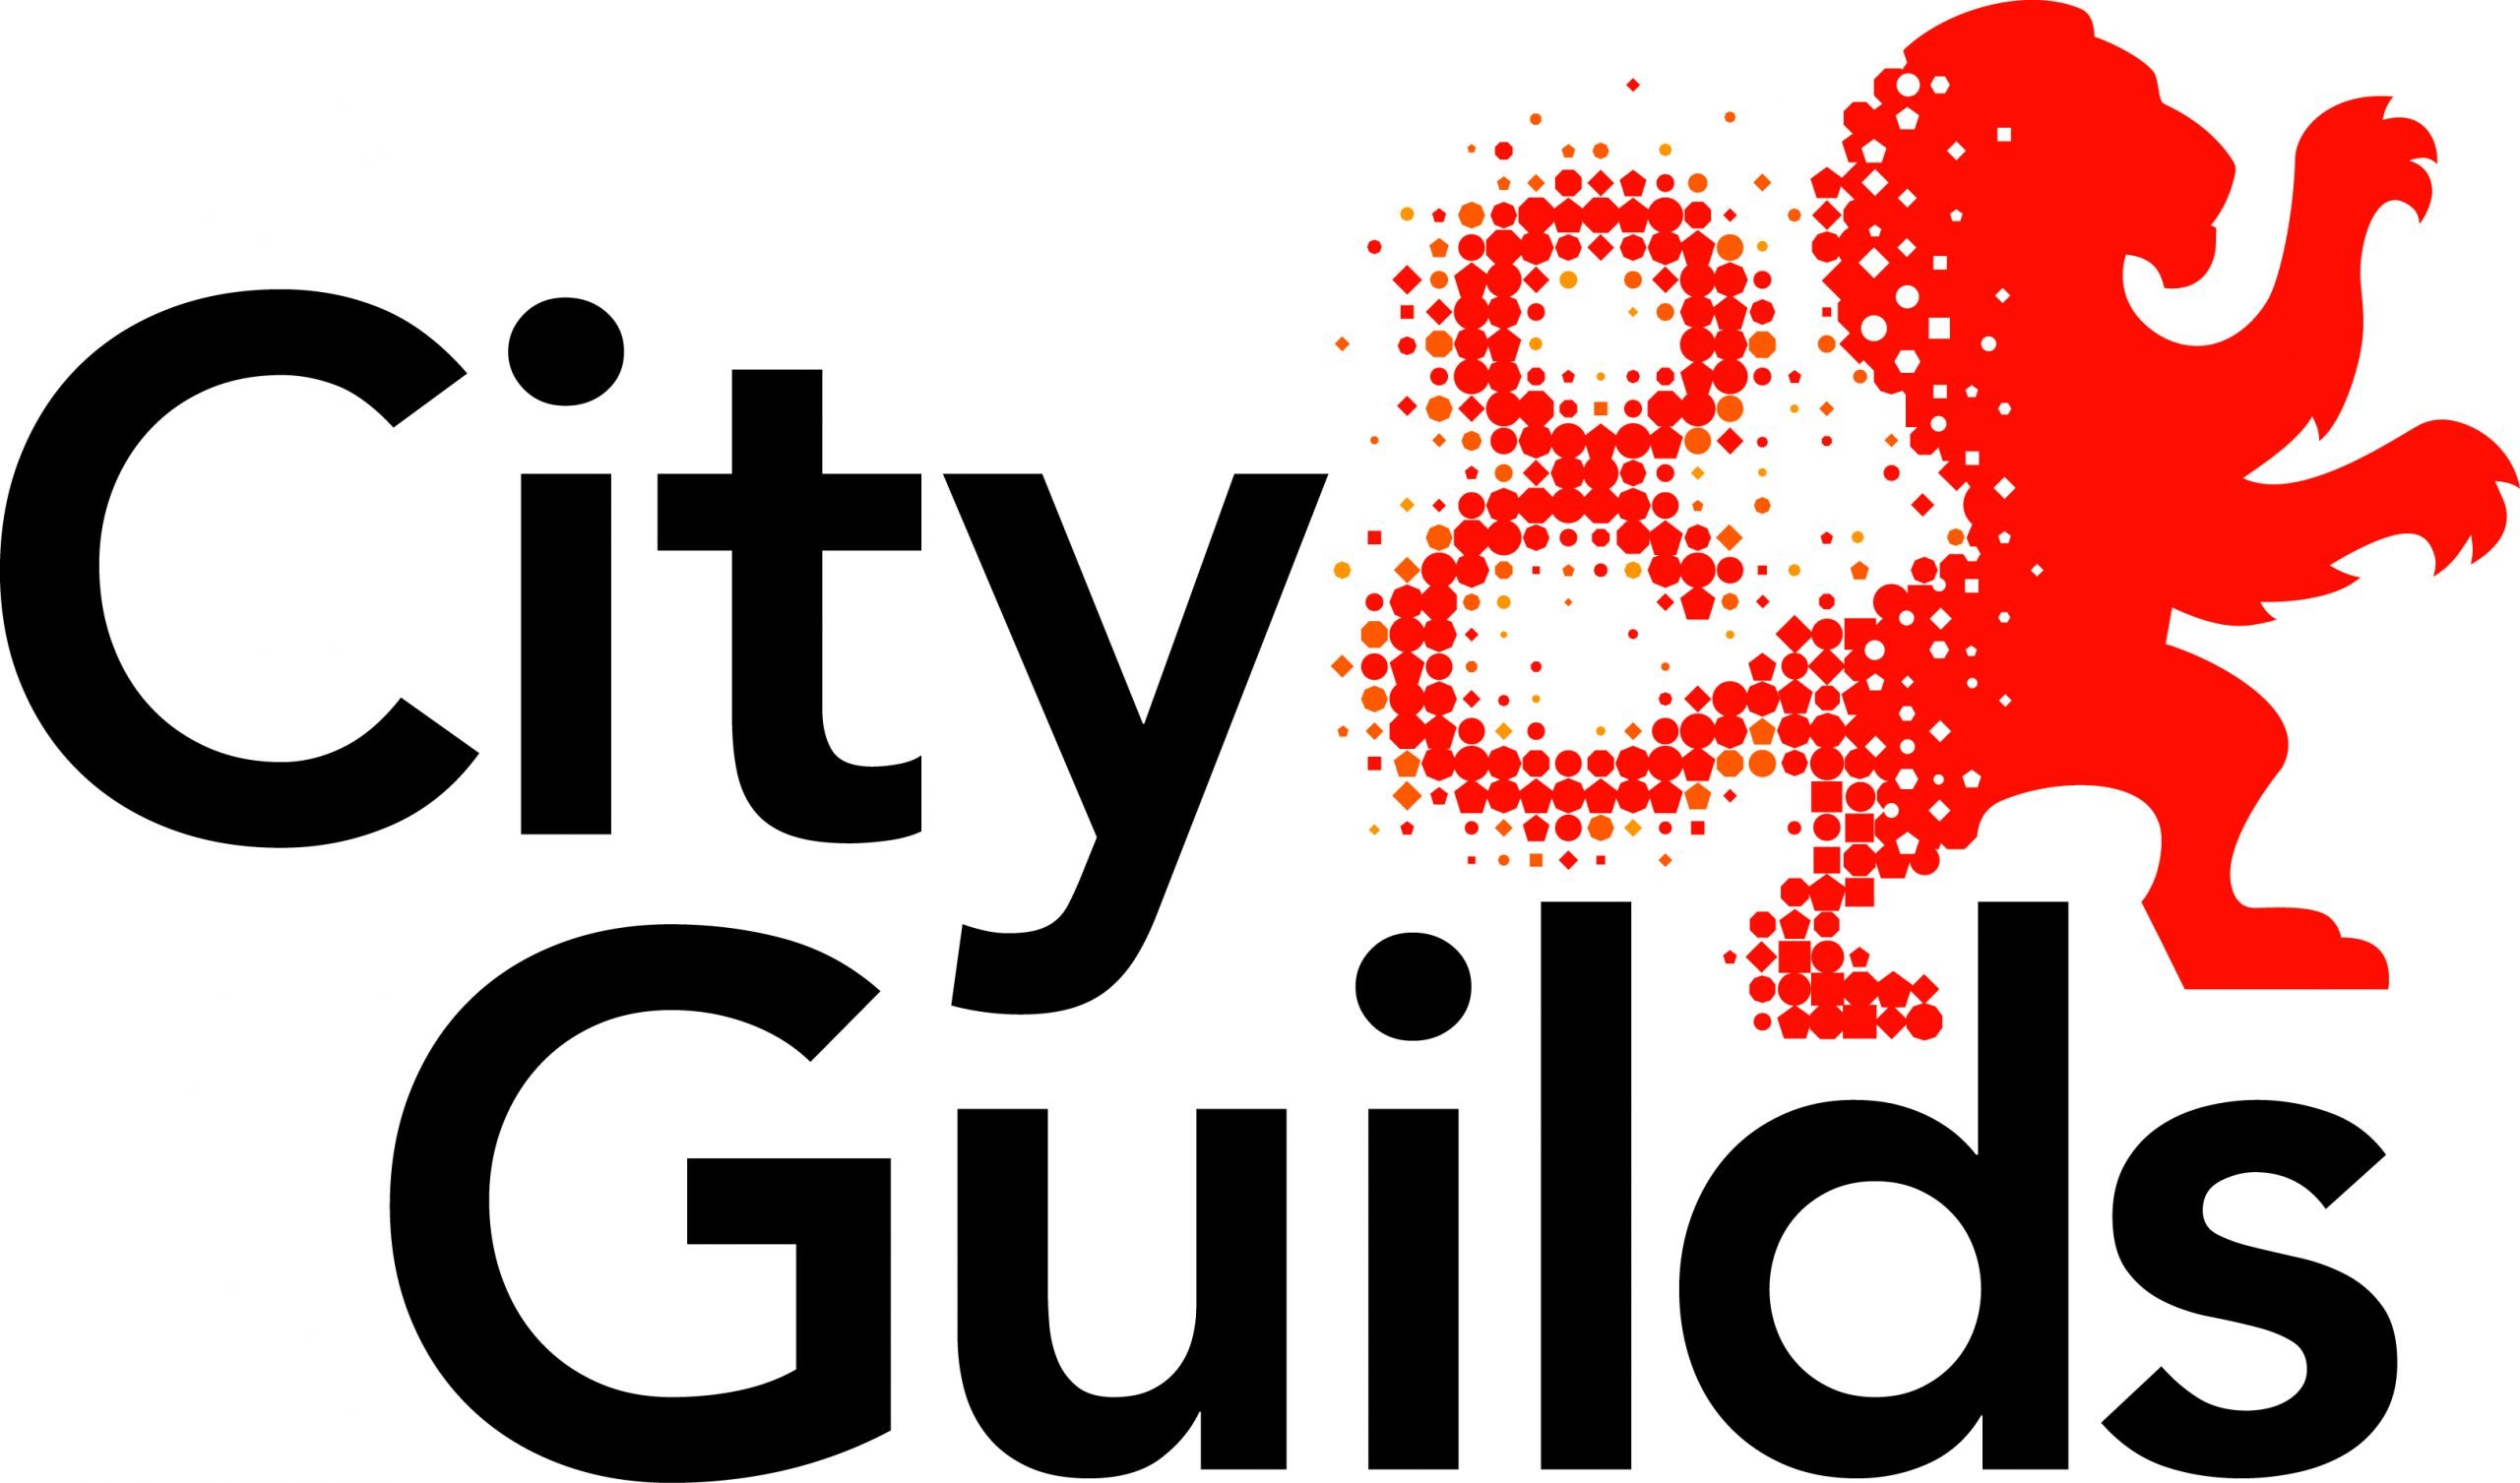 City＆Guilds是英国领先的职业奖励机构，拥有1000多名员工，每年提供超过50％的NVQ和180万学习者。我们在全球81个国家 /地区拥有8500多个中心 - 以及一个国际办事处以支持它们。<br /> <br />在City＆Guilds，我们相信通过合作来卓越。在我们发展和促进职业技能的工作中，我们借鉴了行业，政府和个人的专业知识和支持。反过来，我们为分享我们愿景和价值观的组织和项目提供了经验，并提供财务支持。